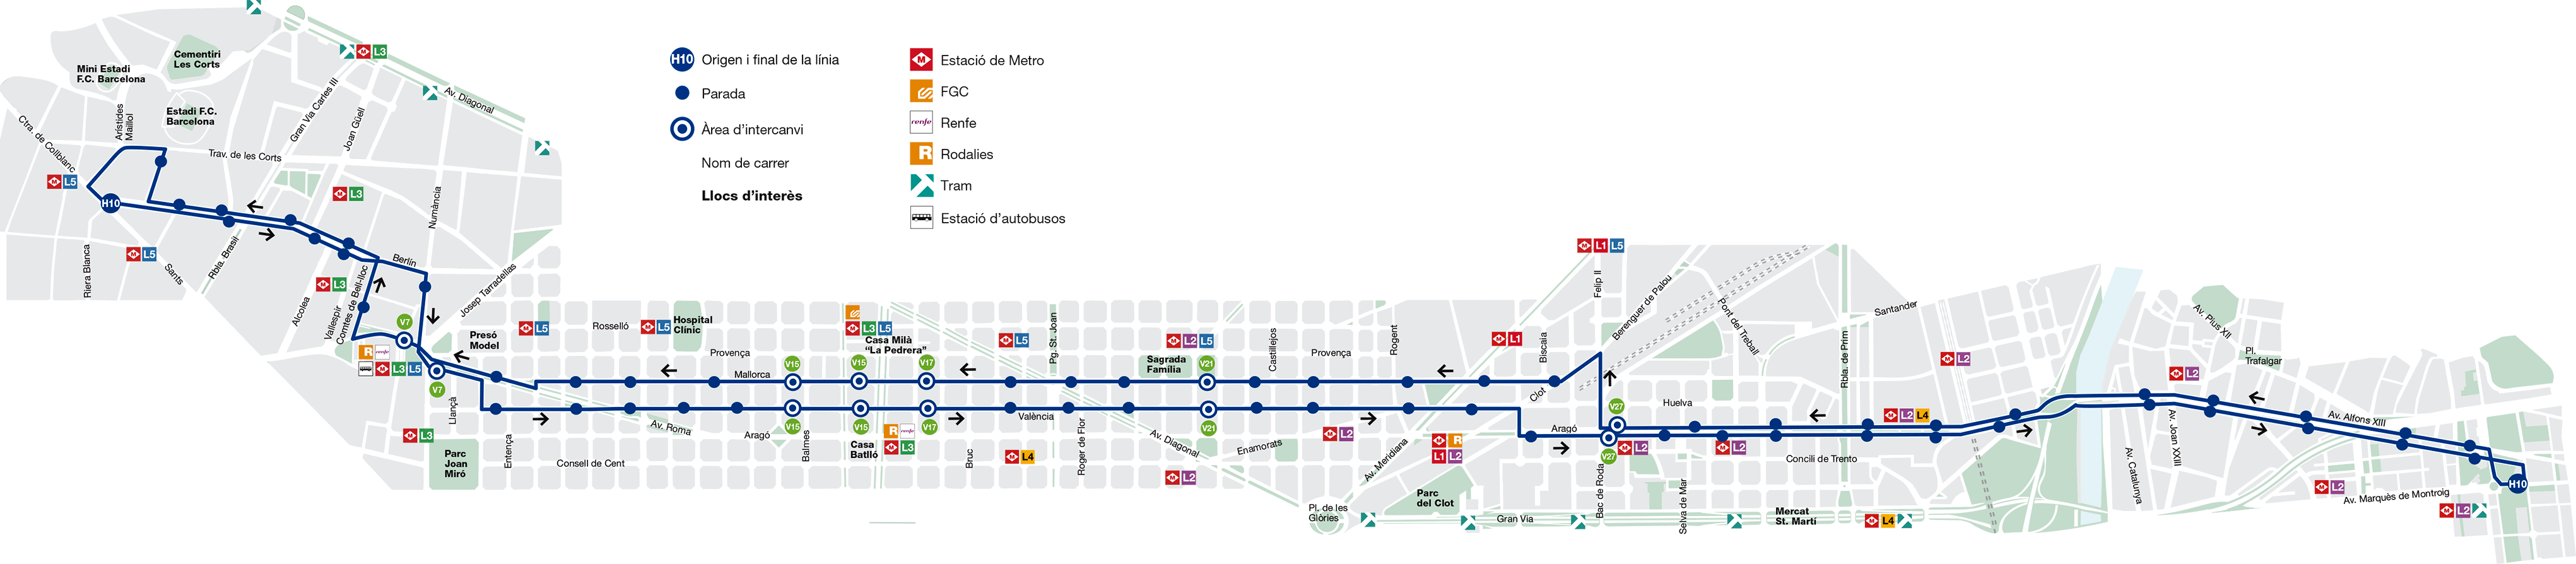 Barcelona bus map line H10 2014